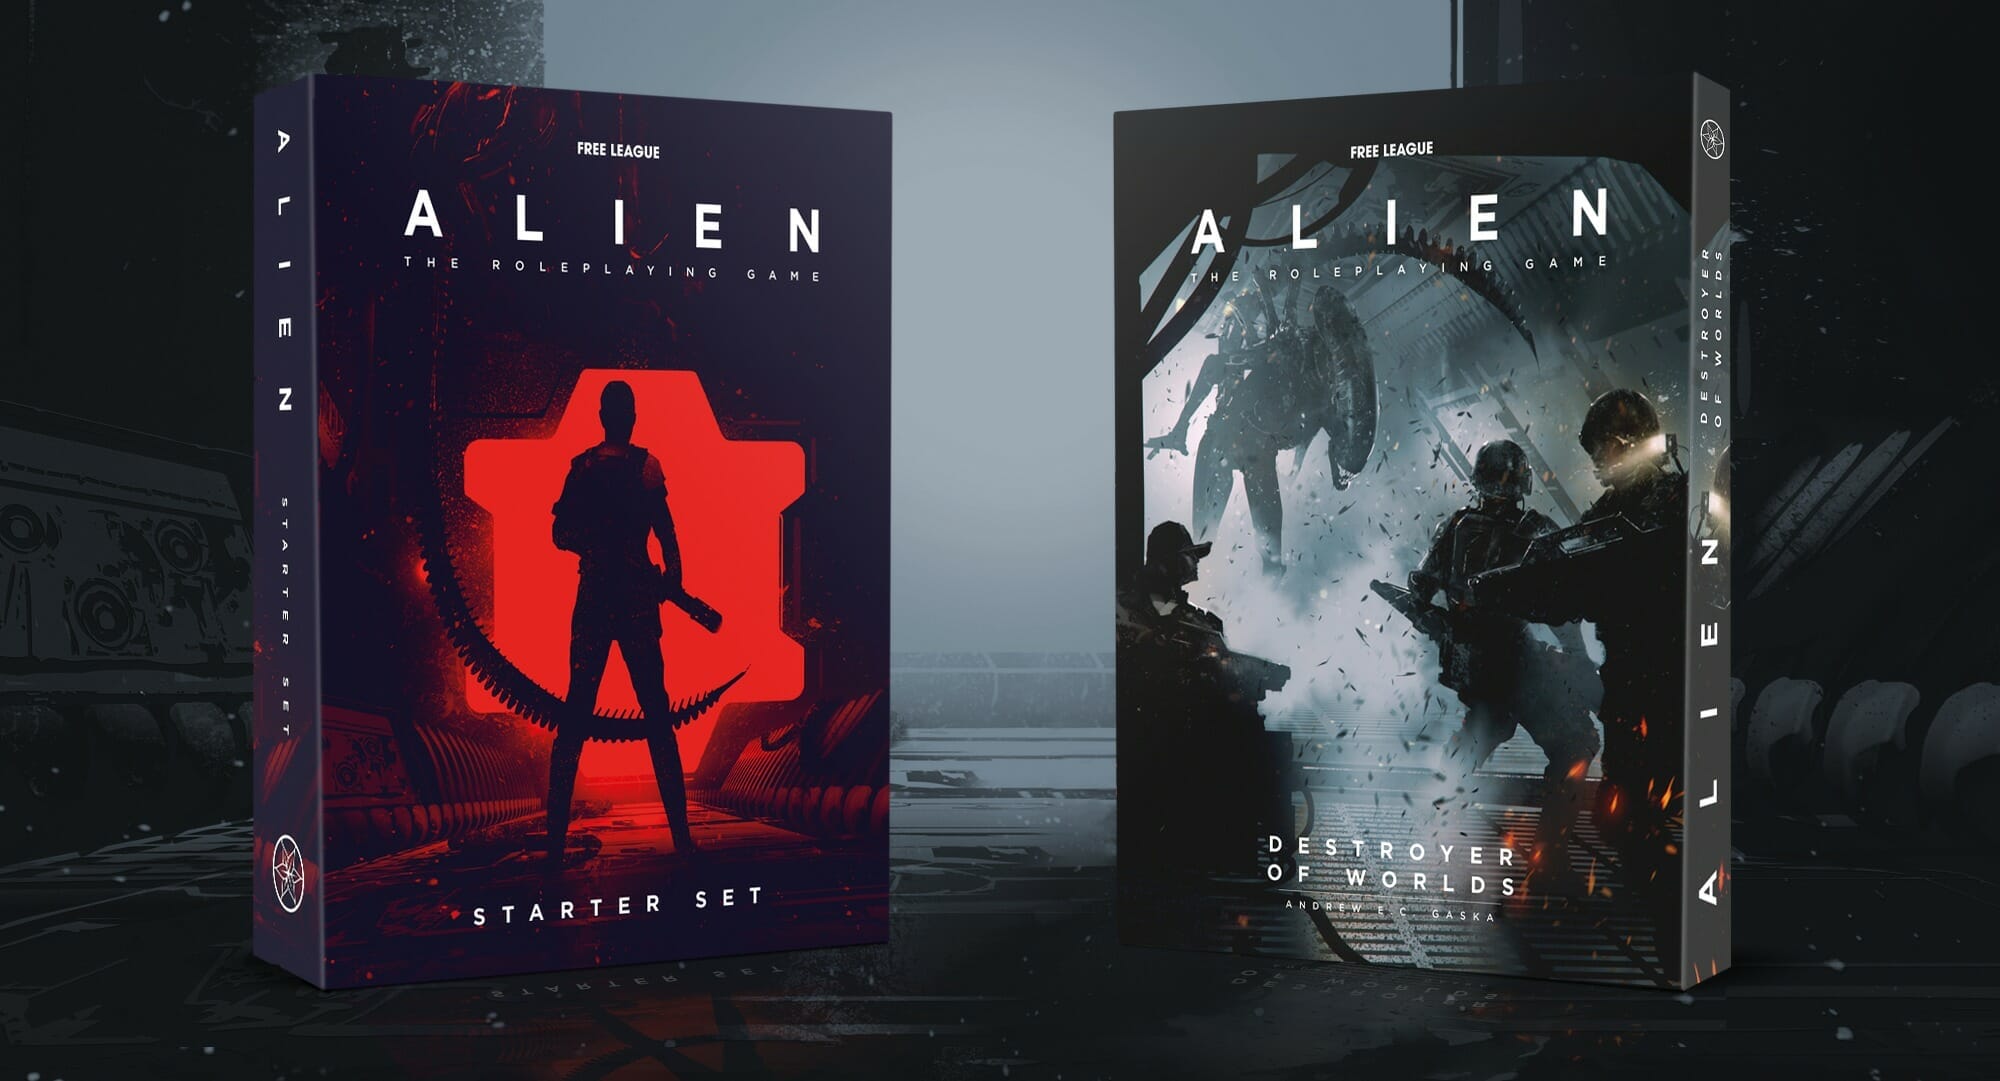 Alien RPG books from Free League Publishing